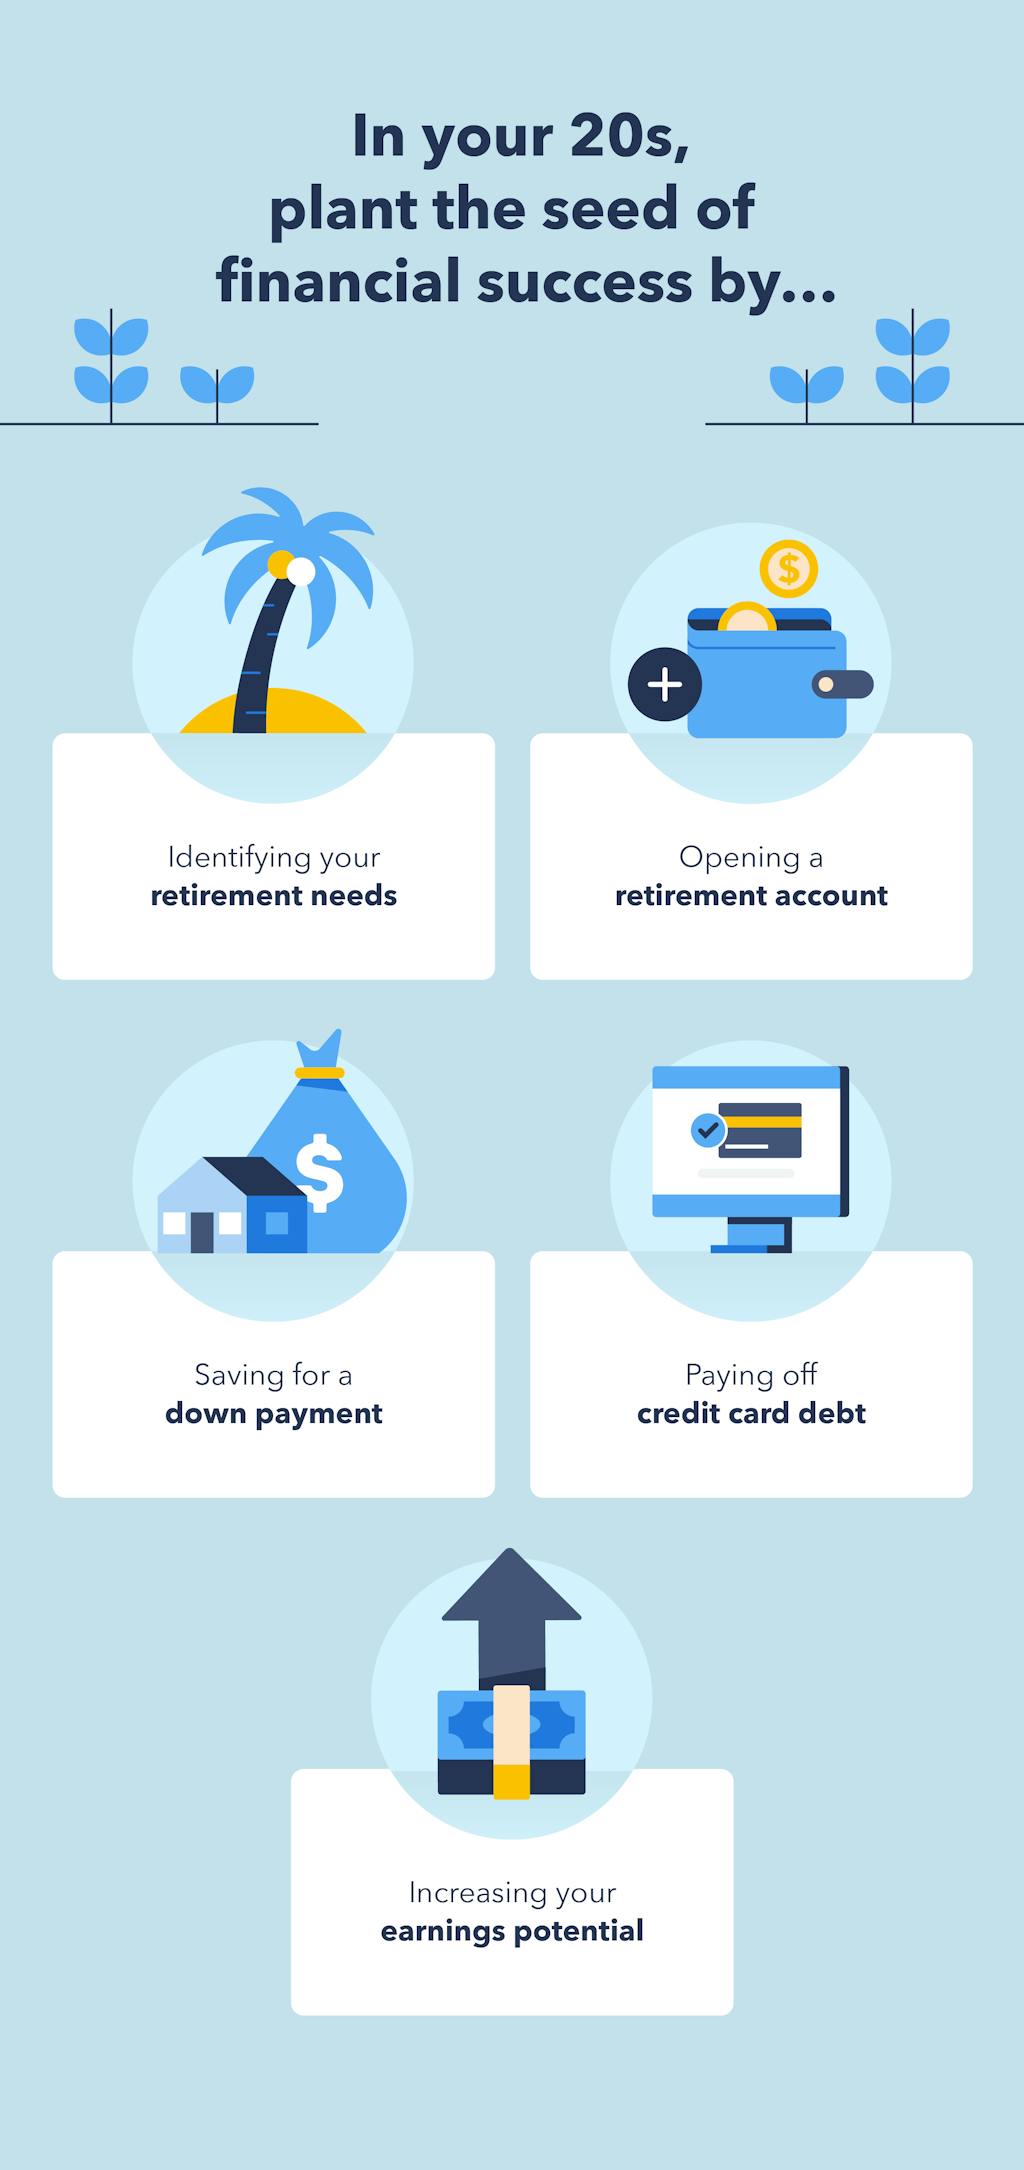 17 Examples of Long-term Financial Goals